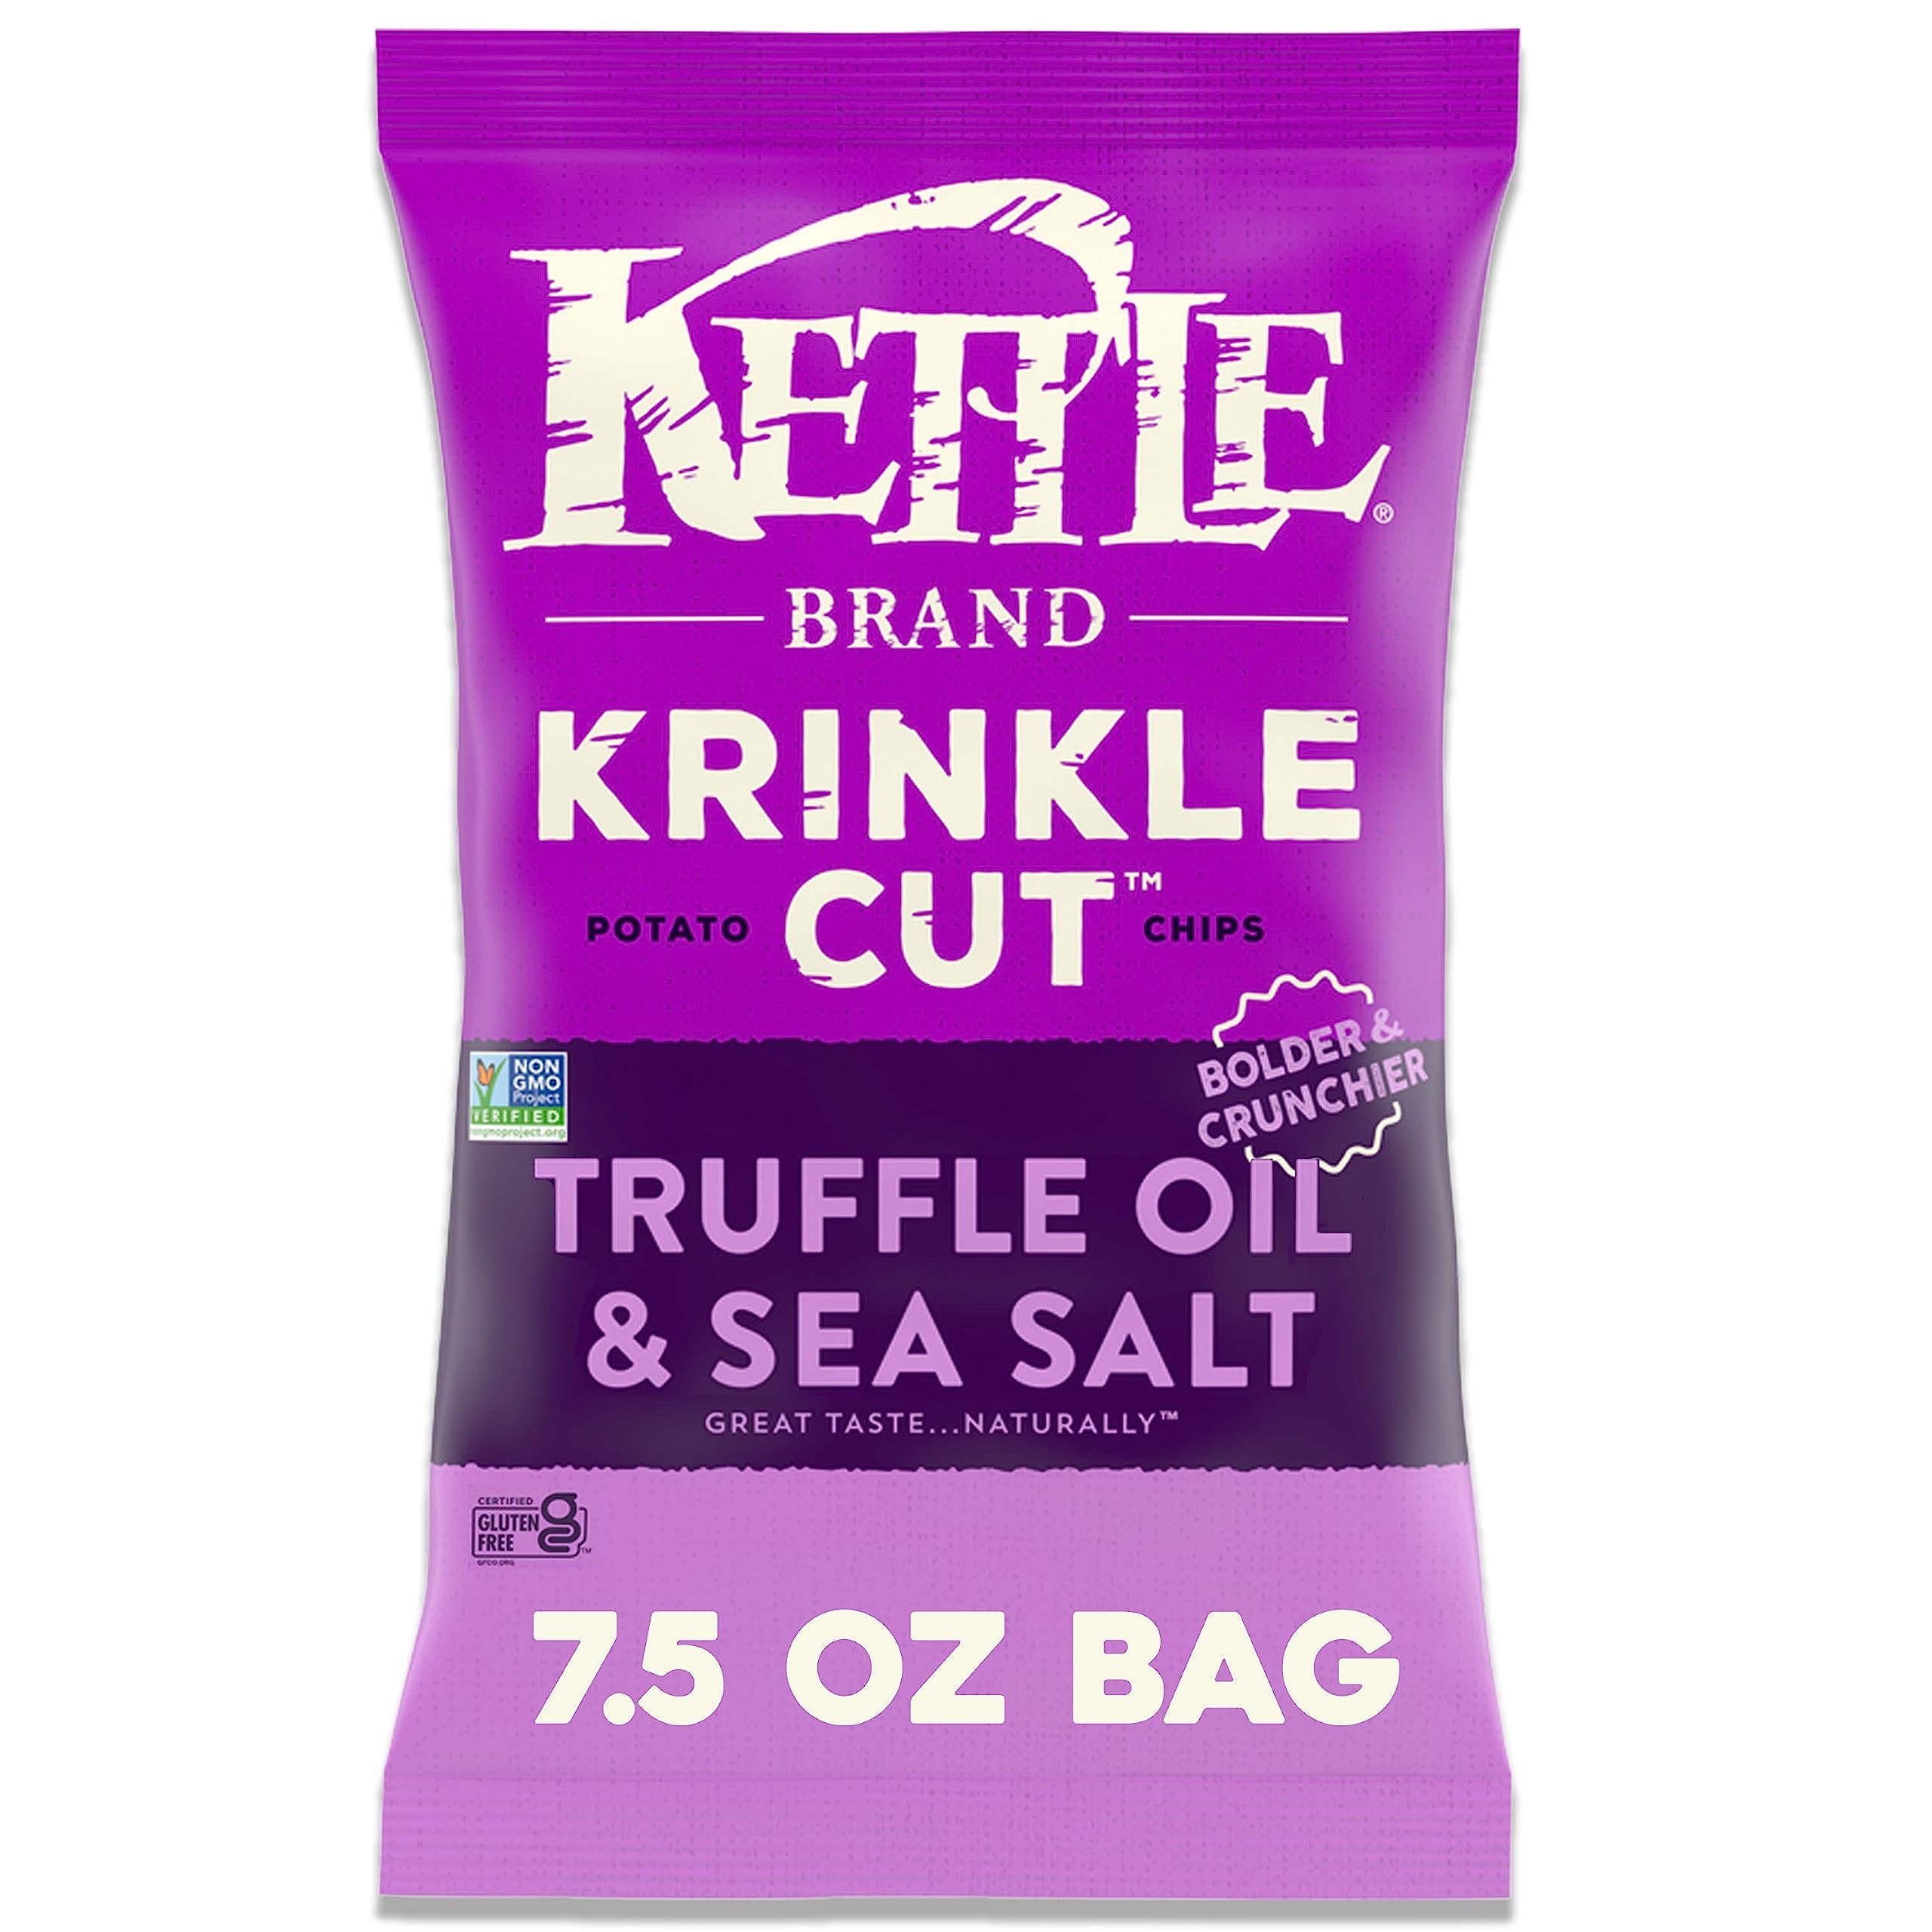 7.5-Oz Kettle Brand Krinkle Cut Potato Chips (Truffle & Sea Salt) $2.55 w/ S&S + Free Shipping w/ Prime or on $35+